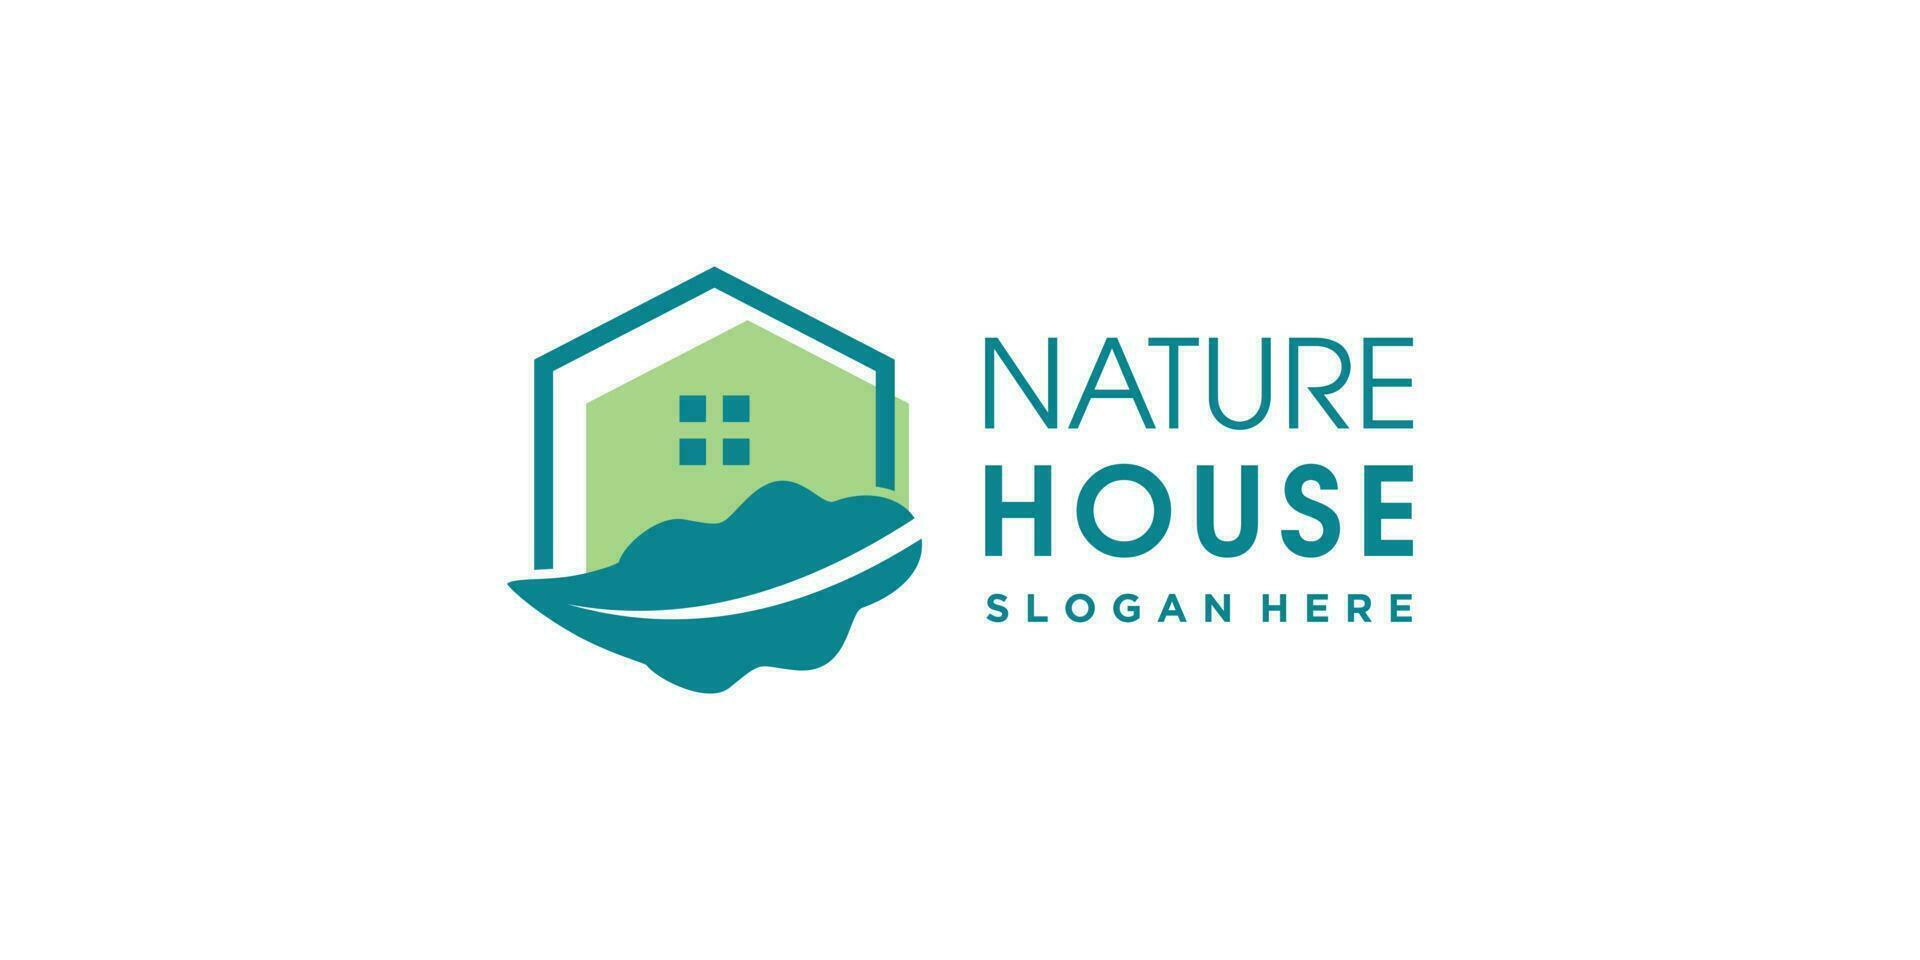 Green house logo design element vector with unique shape